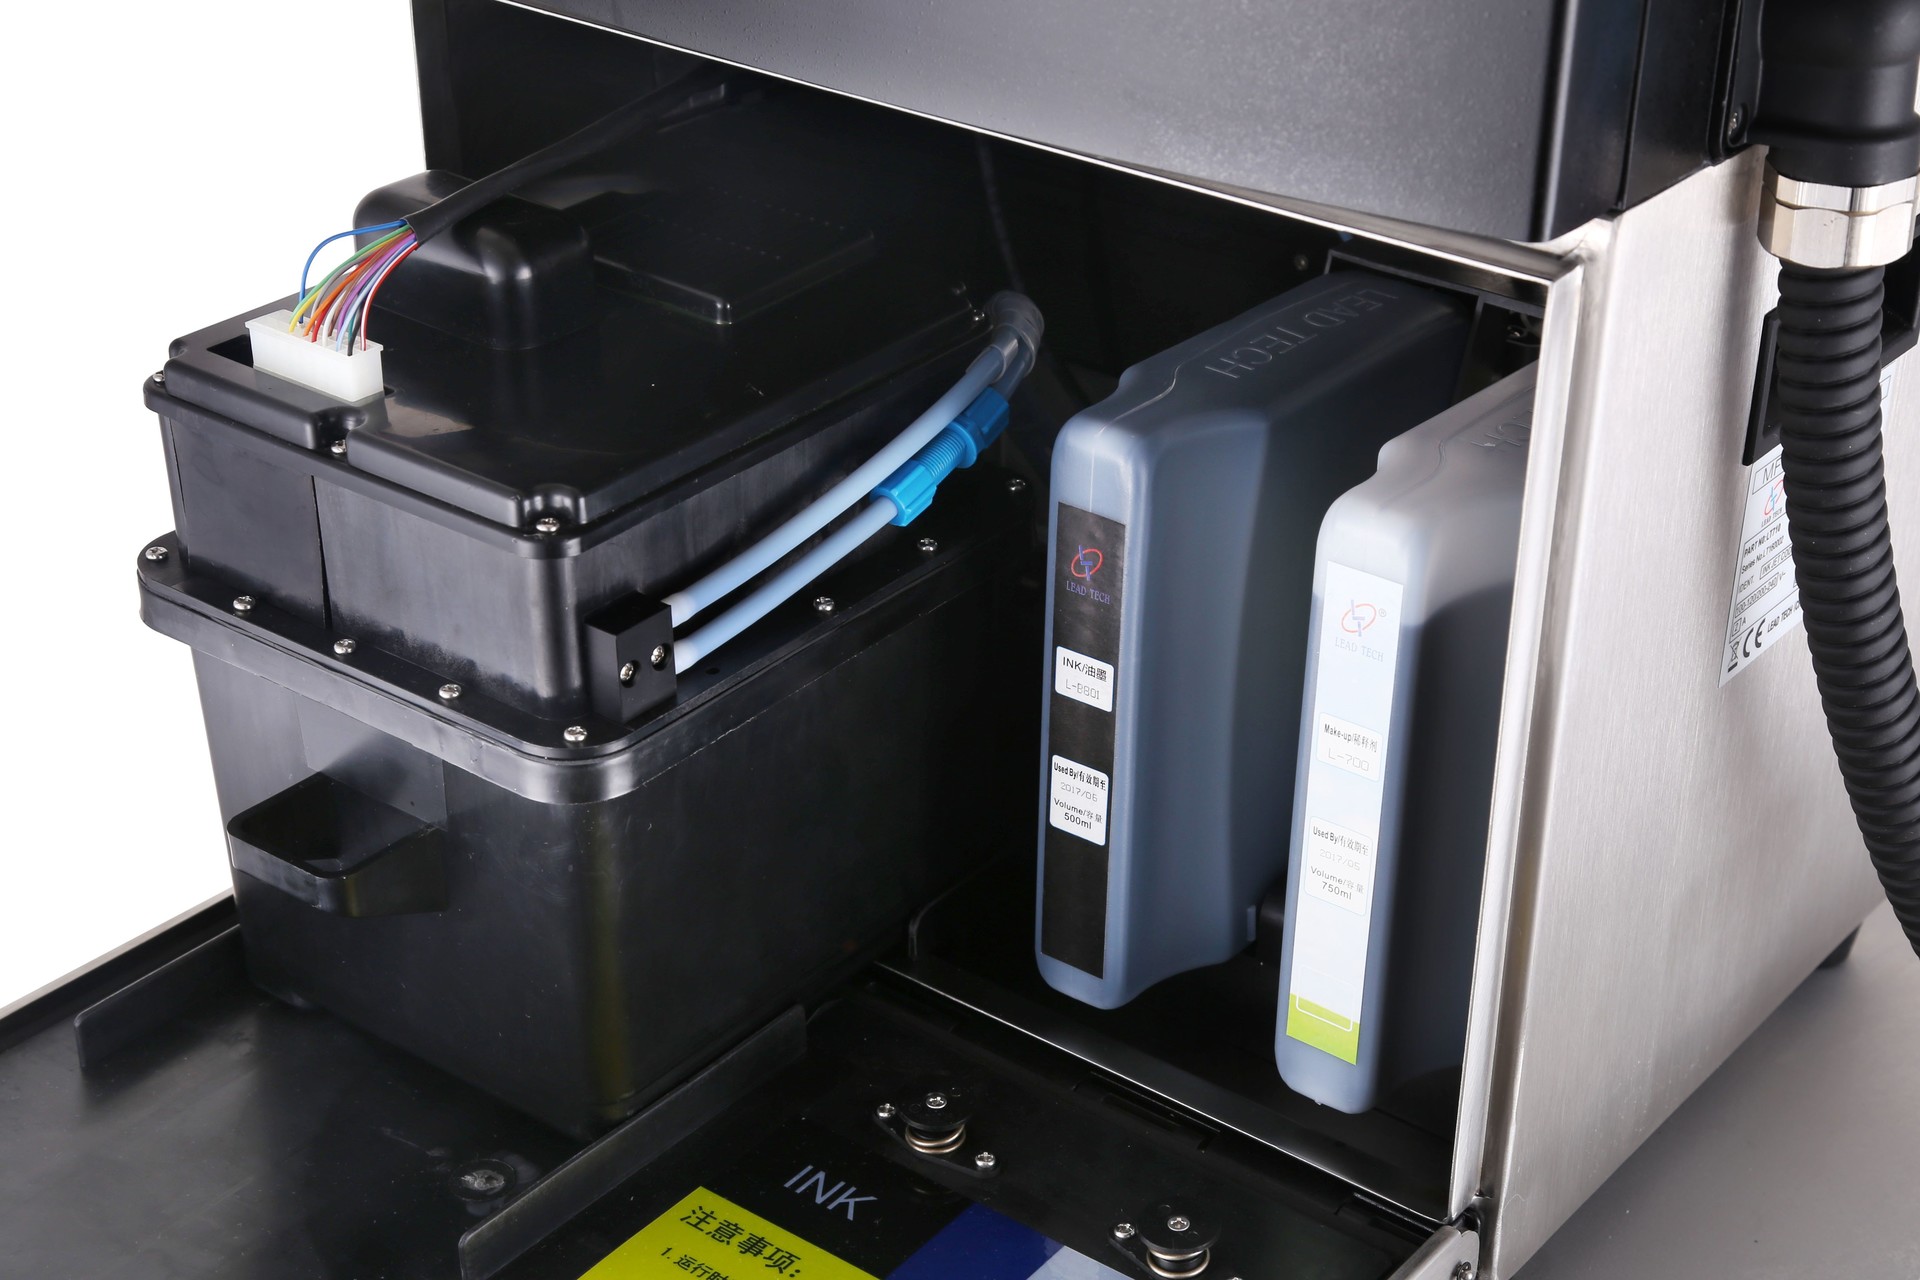 Lead Tech Lt710 Moving Head Printing Continuous Cij Inkjet Printer